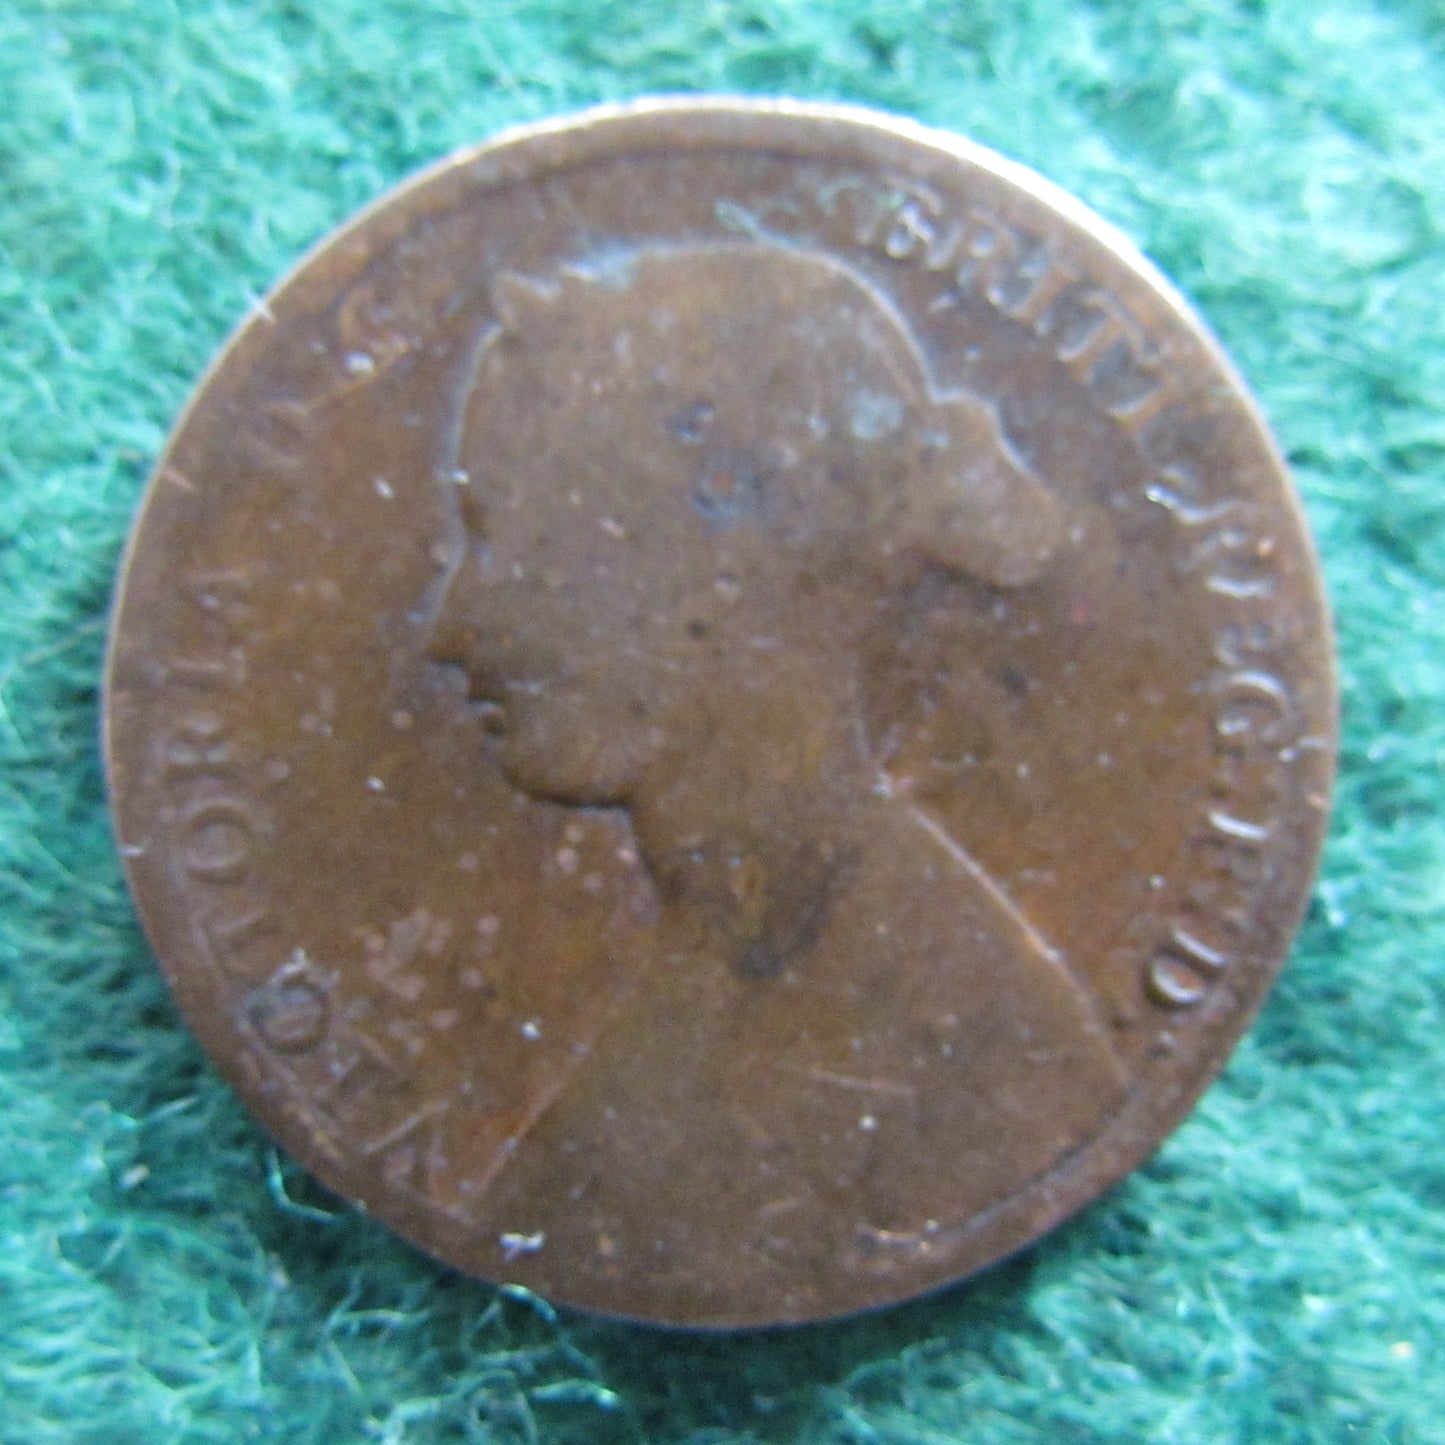 GB British UK English 1861 Half Penny Queen Victoria Coin - Bun Head